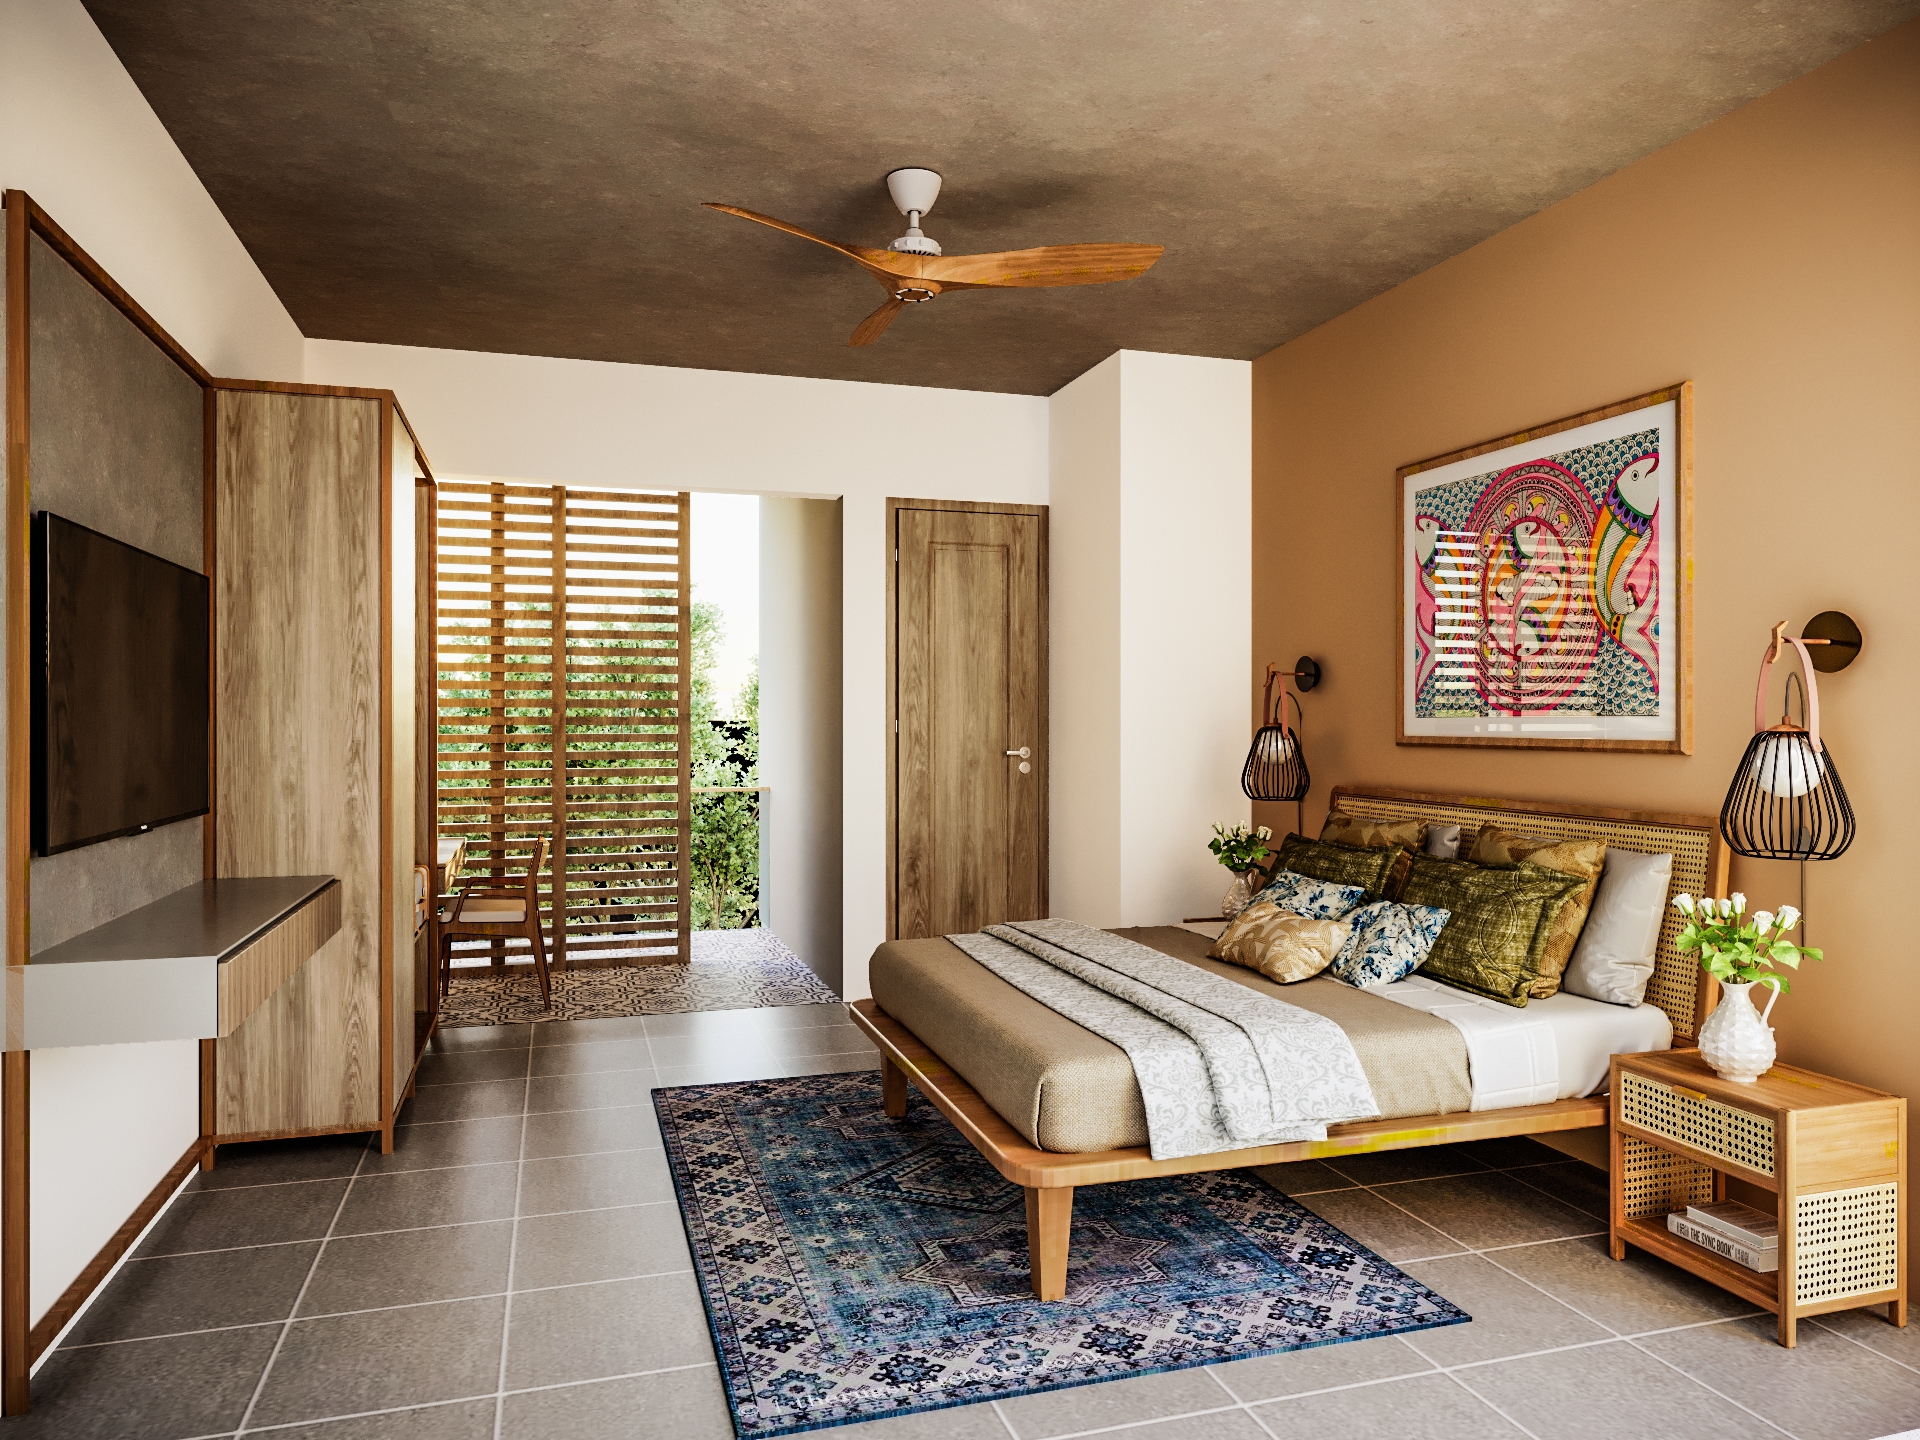 Rustic Bedroom Design With Wall Art